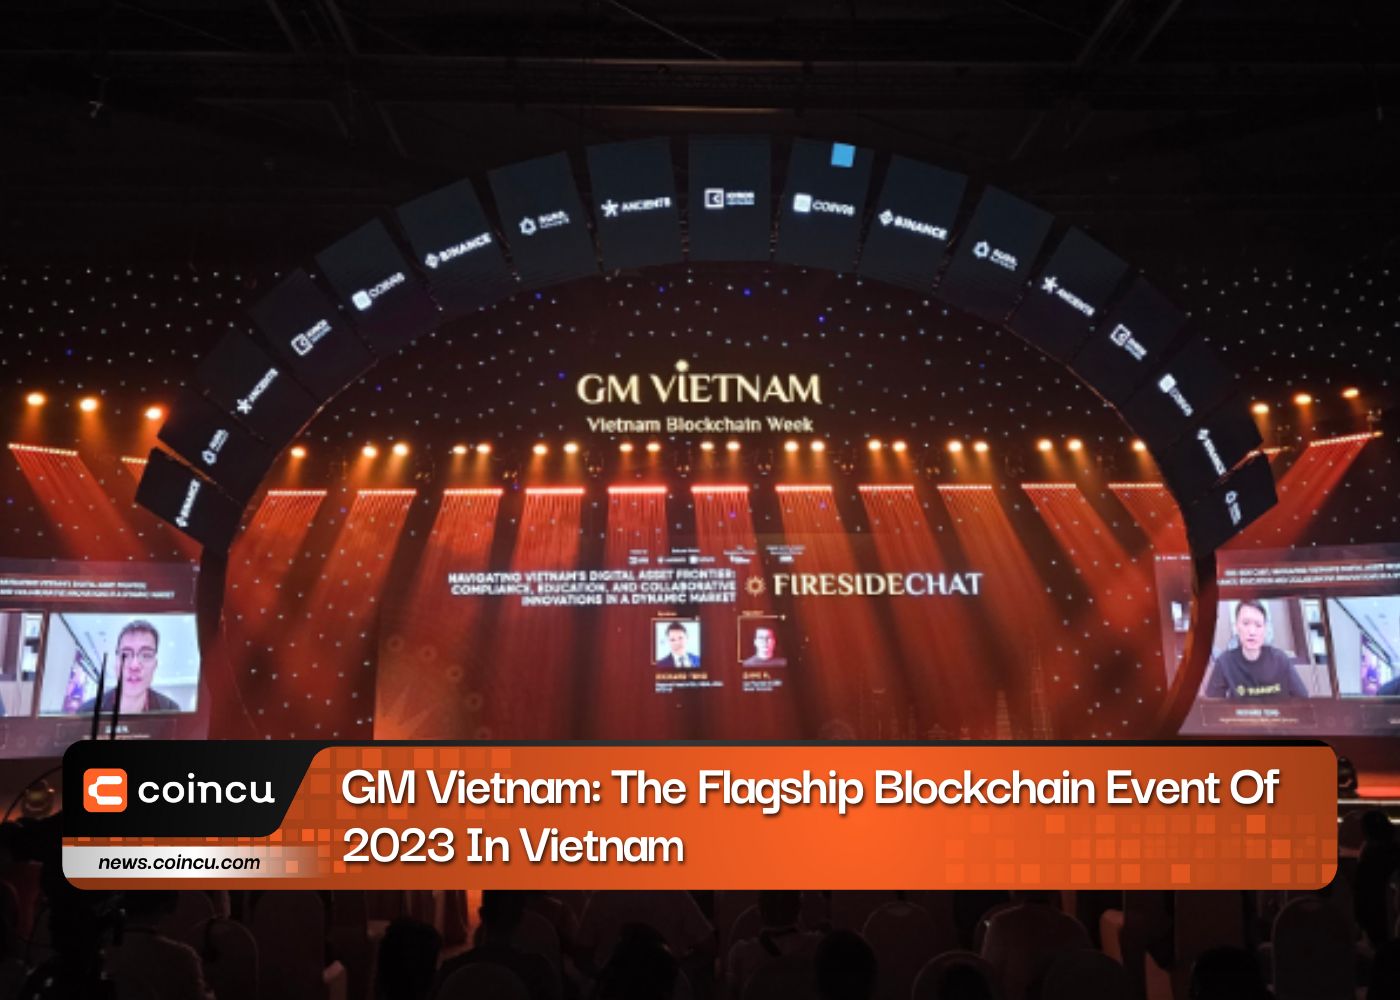 GM Vietnam: The Flagship Blockchain Event Of 2023 In Vietnam